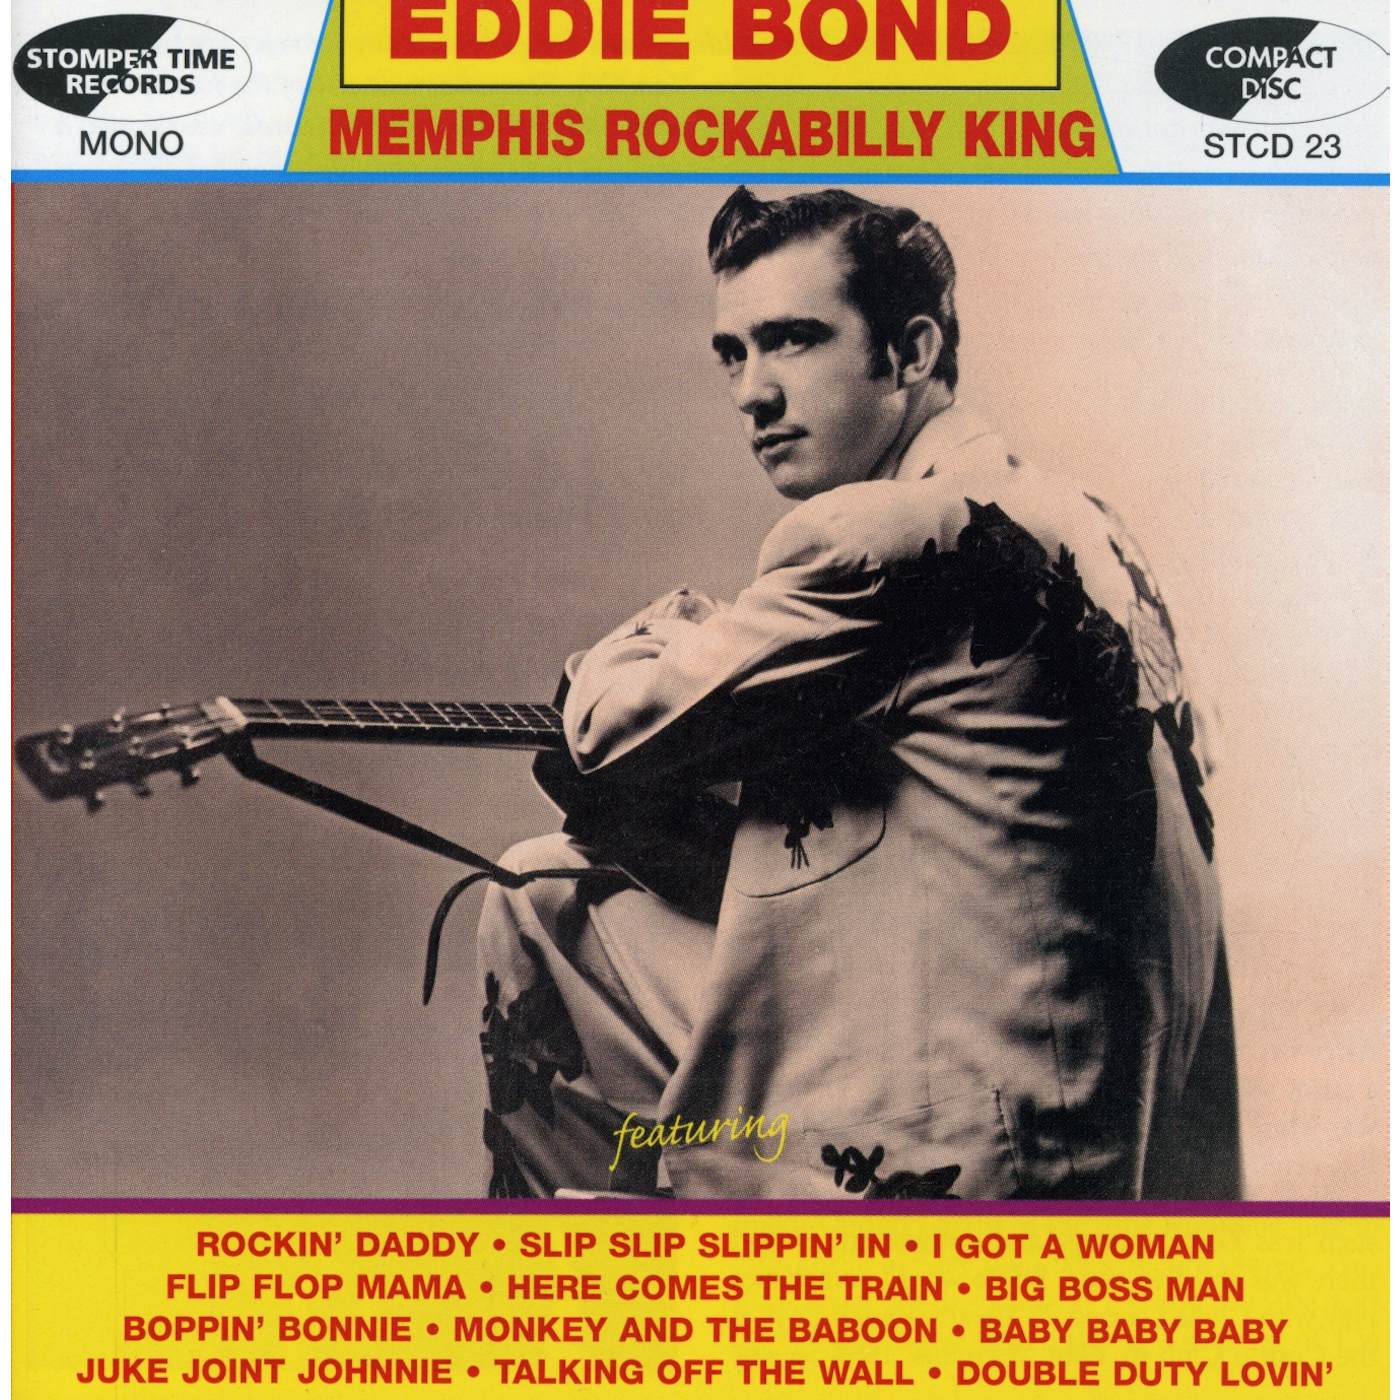 Eddie Bond MEMPHIS ROCKABILLY KING CD